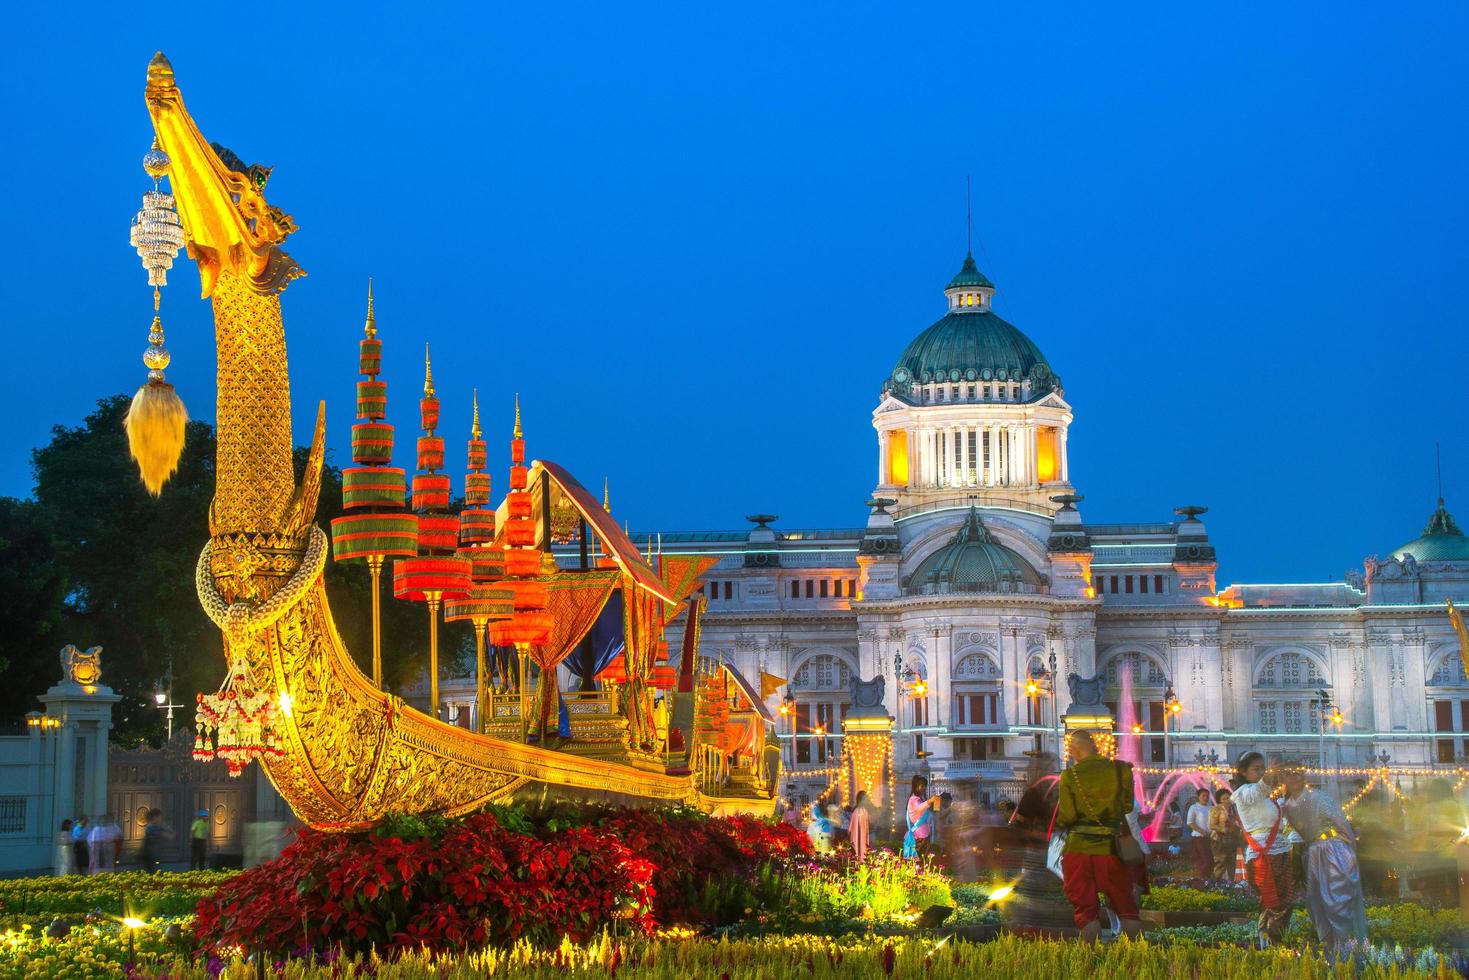 Bangkok, Thailand - December 24, 2018 - Replica of the Suphannahong Royal Barge in The Aun Ai Rak Khlai Khwam Nao winter fair at The Royal Plaza, Dusit Palace Plaza or Equestrian Statue Plaza photo